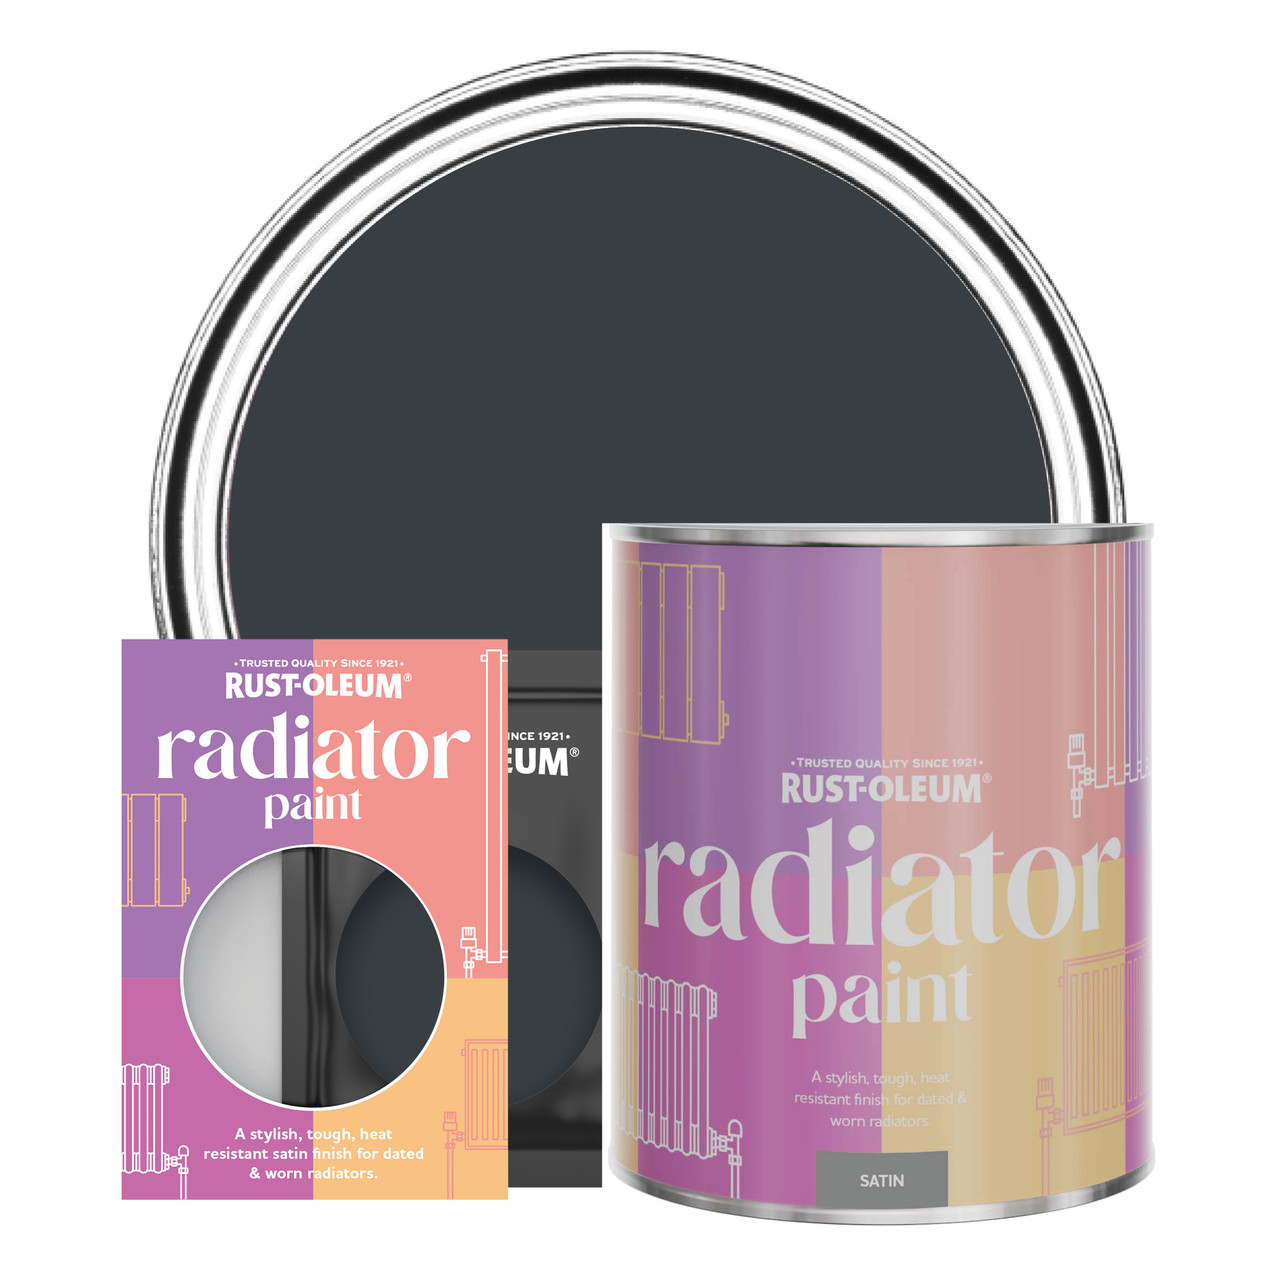 rust-oleum radiator paint, satin finish - anthracite (ral 7016) - 750ml